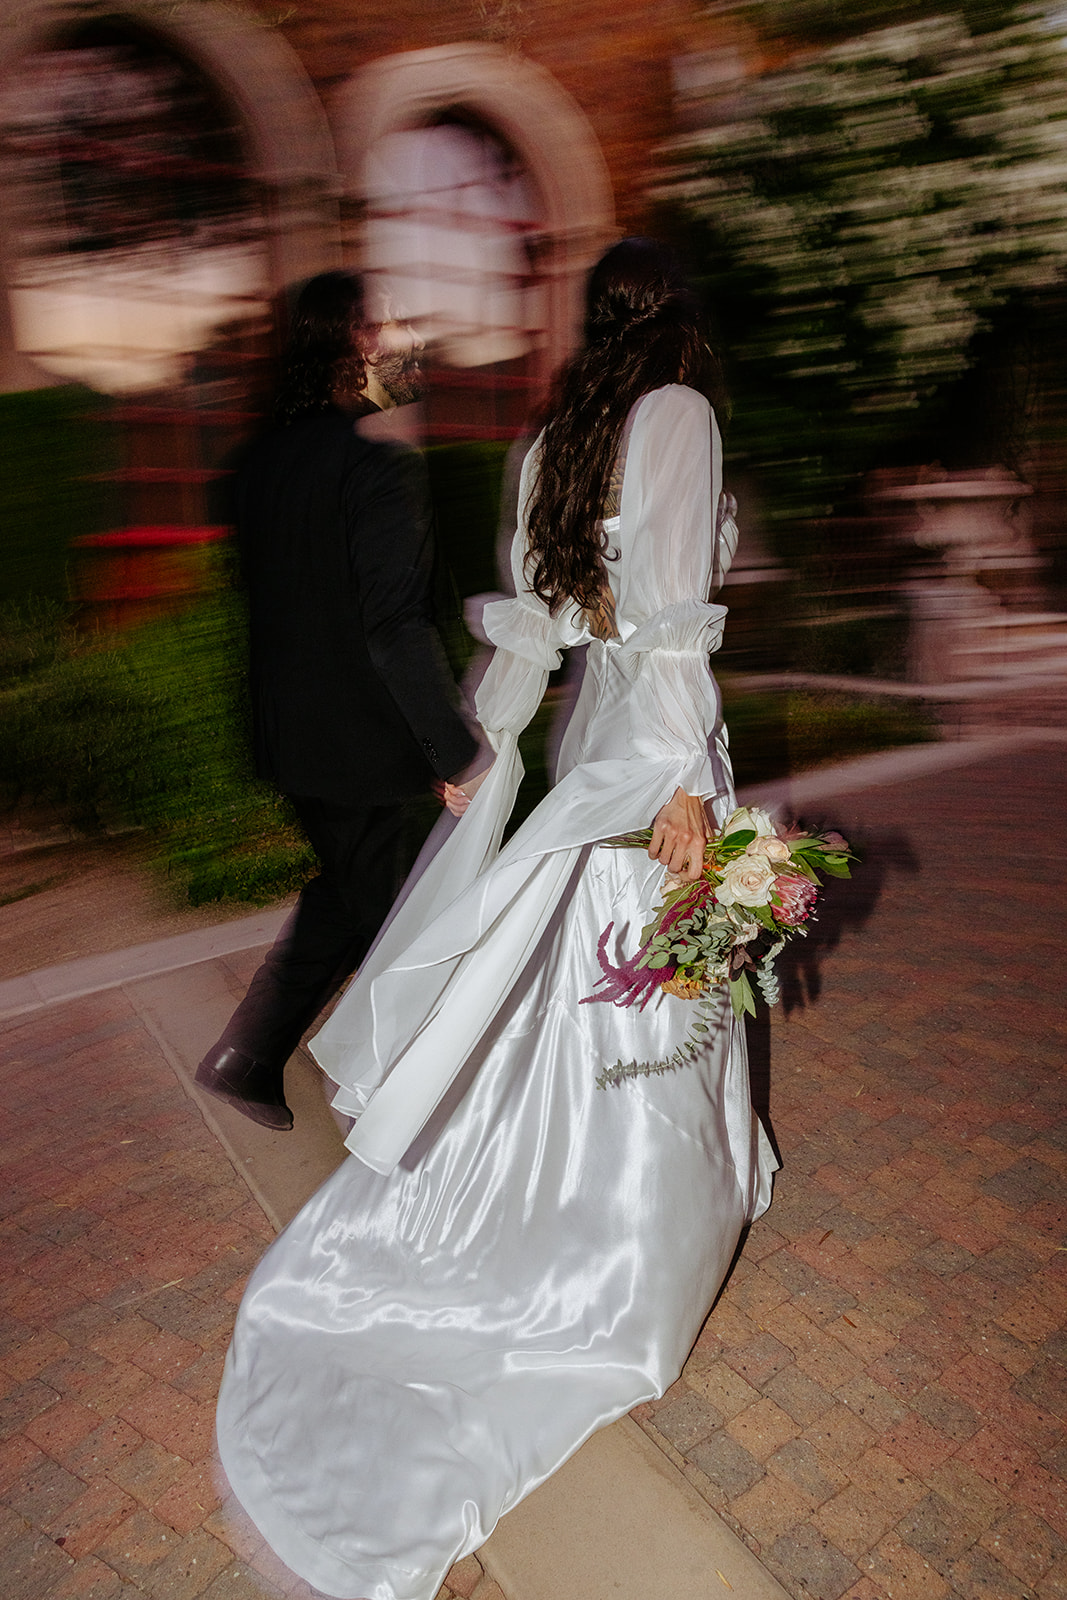 Vintage fairytale elegant romantic blurry direct flash creative destination wedding photography Brianna Kirk Photography